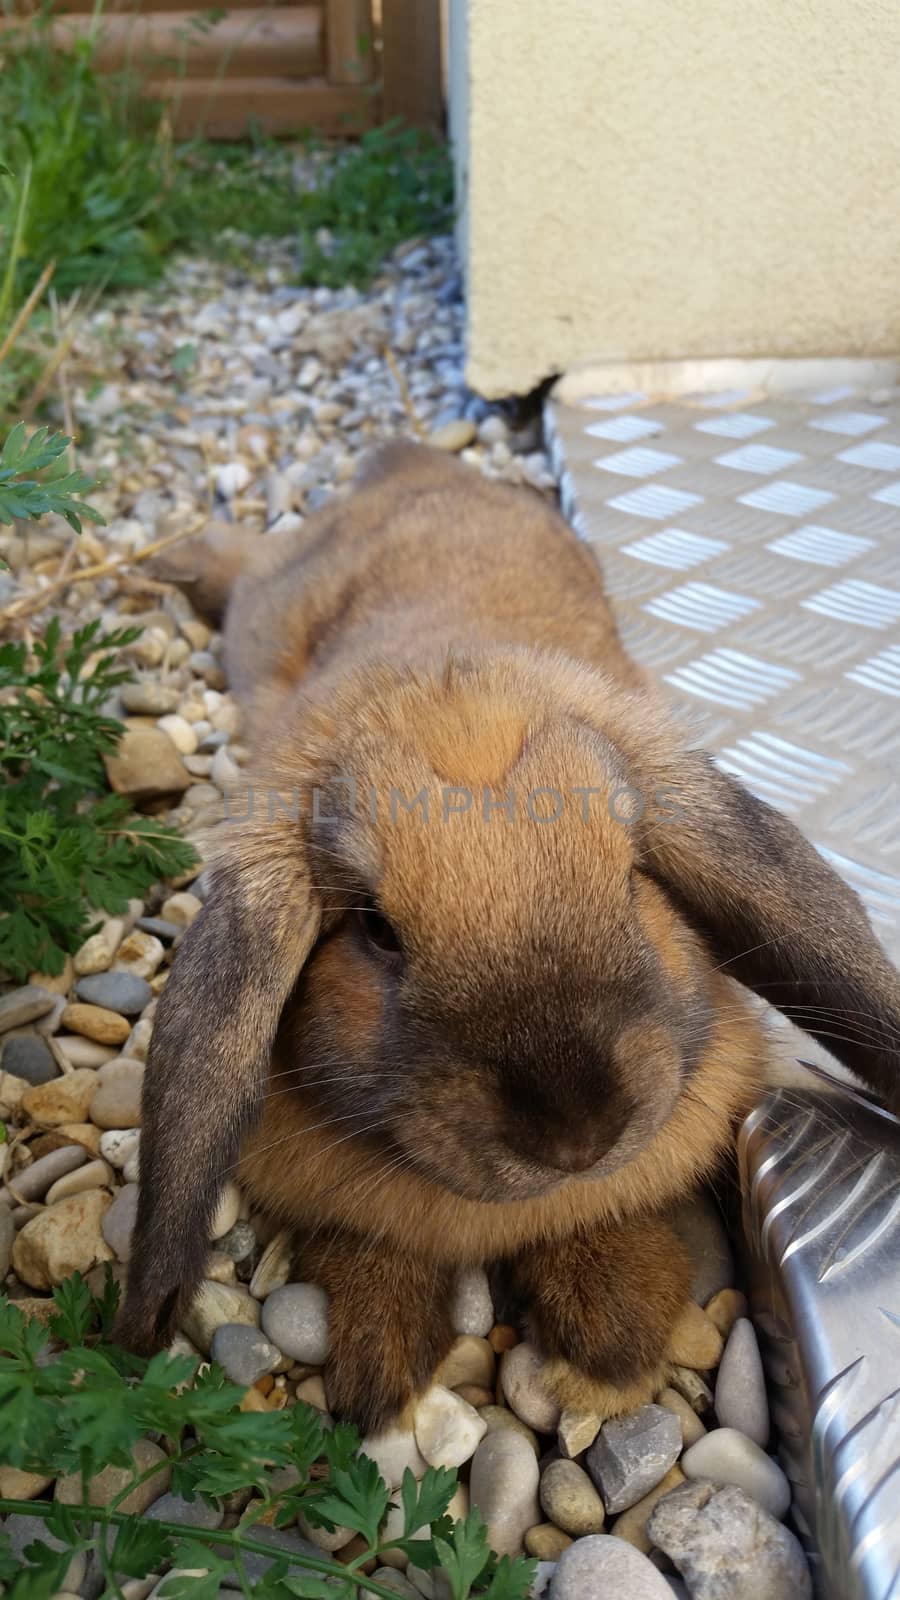 Lovely Rabbit in the Garden by bensib